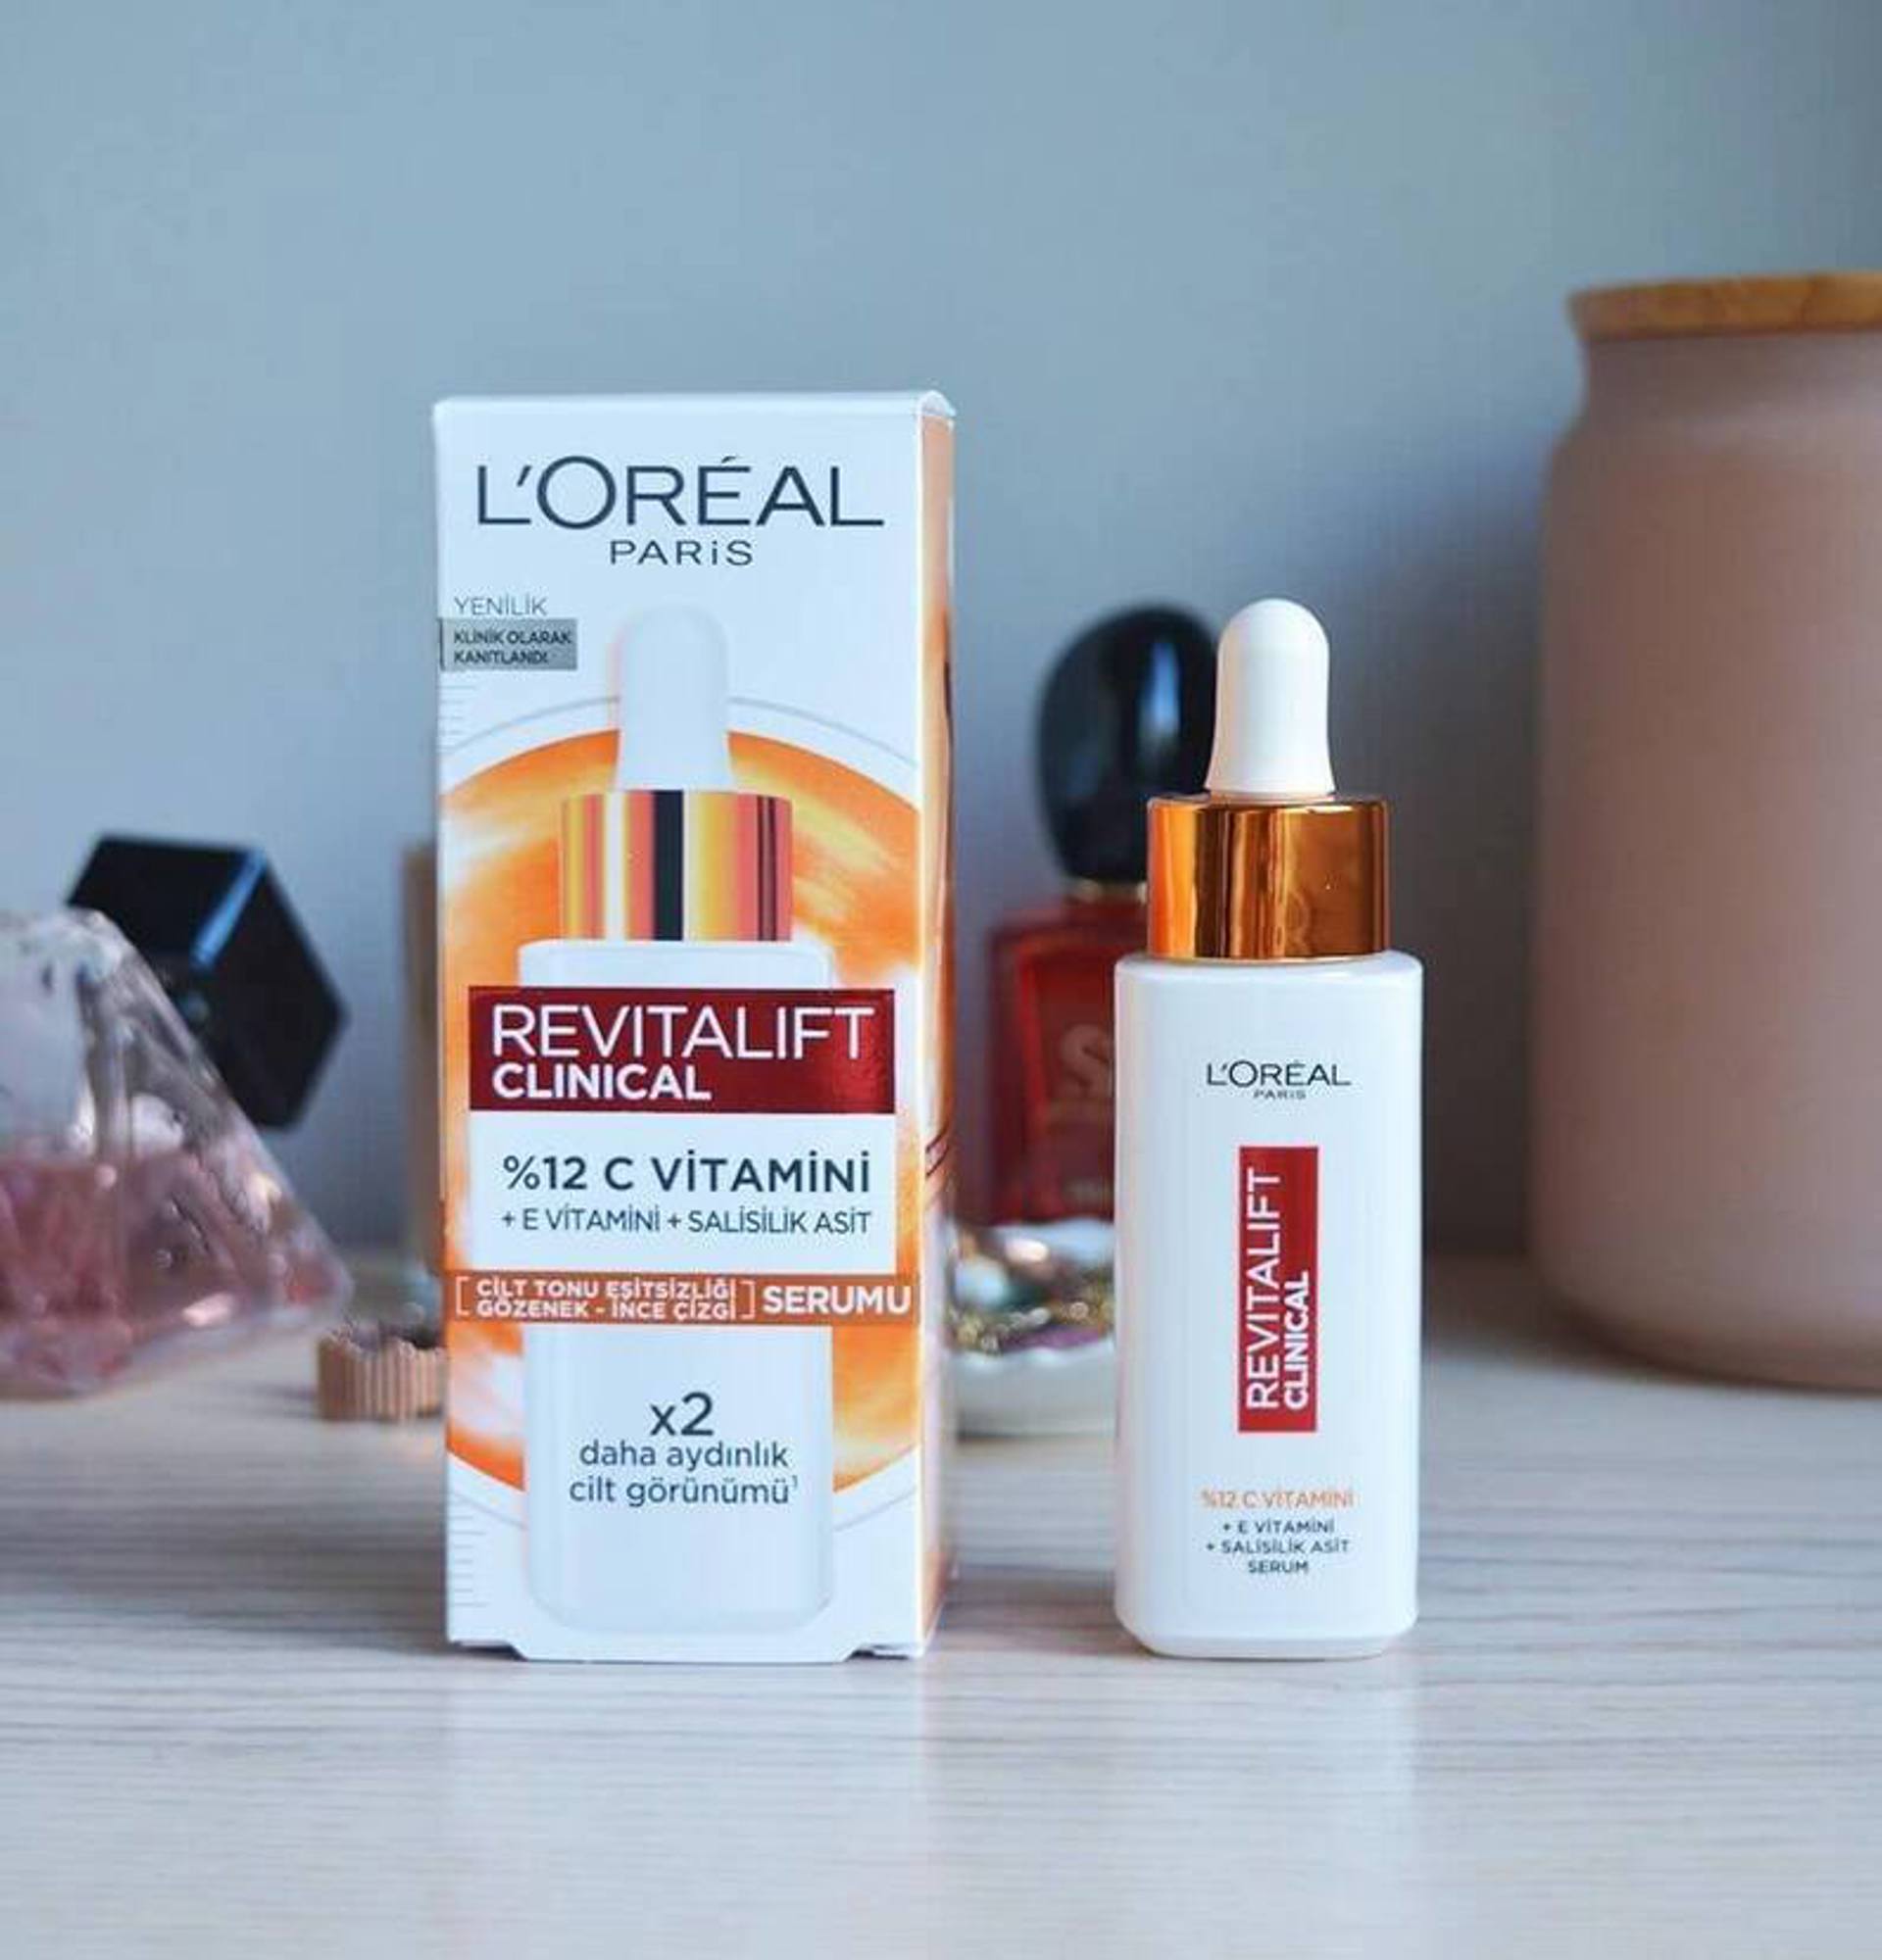  L'Oréal Paris Revitalift Clinical %12 C Vitamini Aydınlatıcı Serum